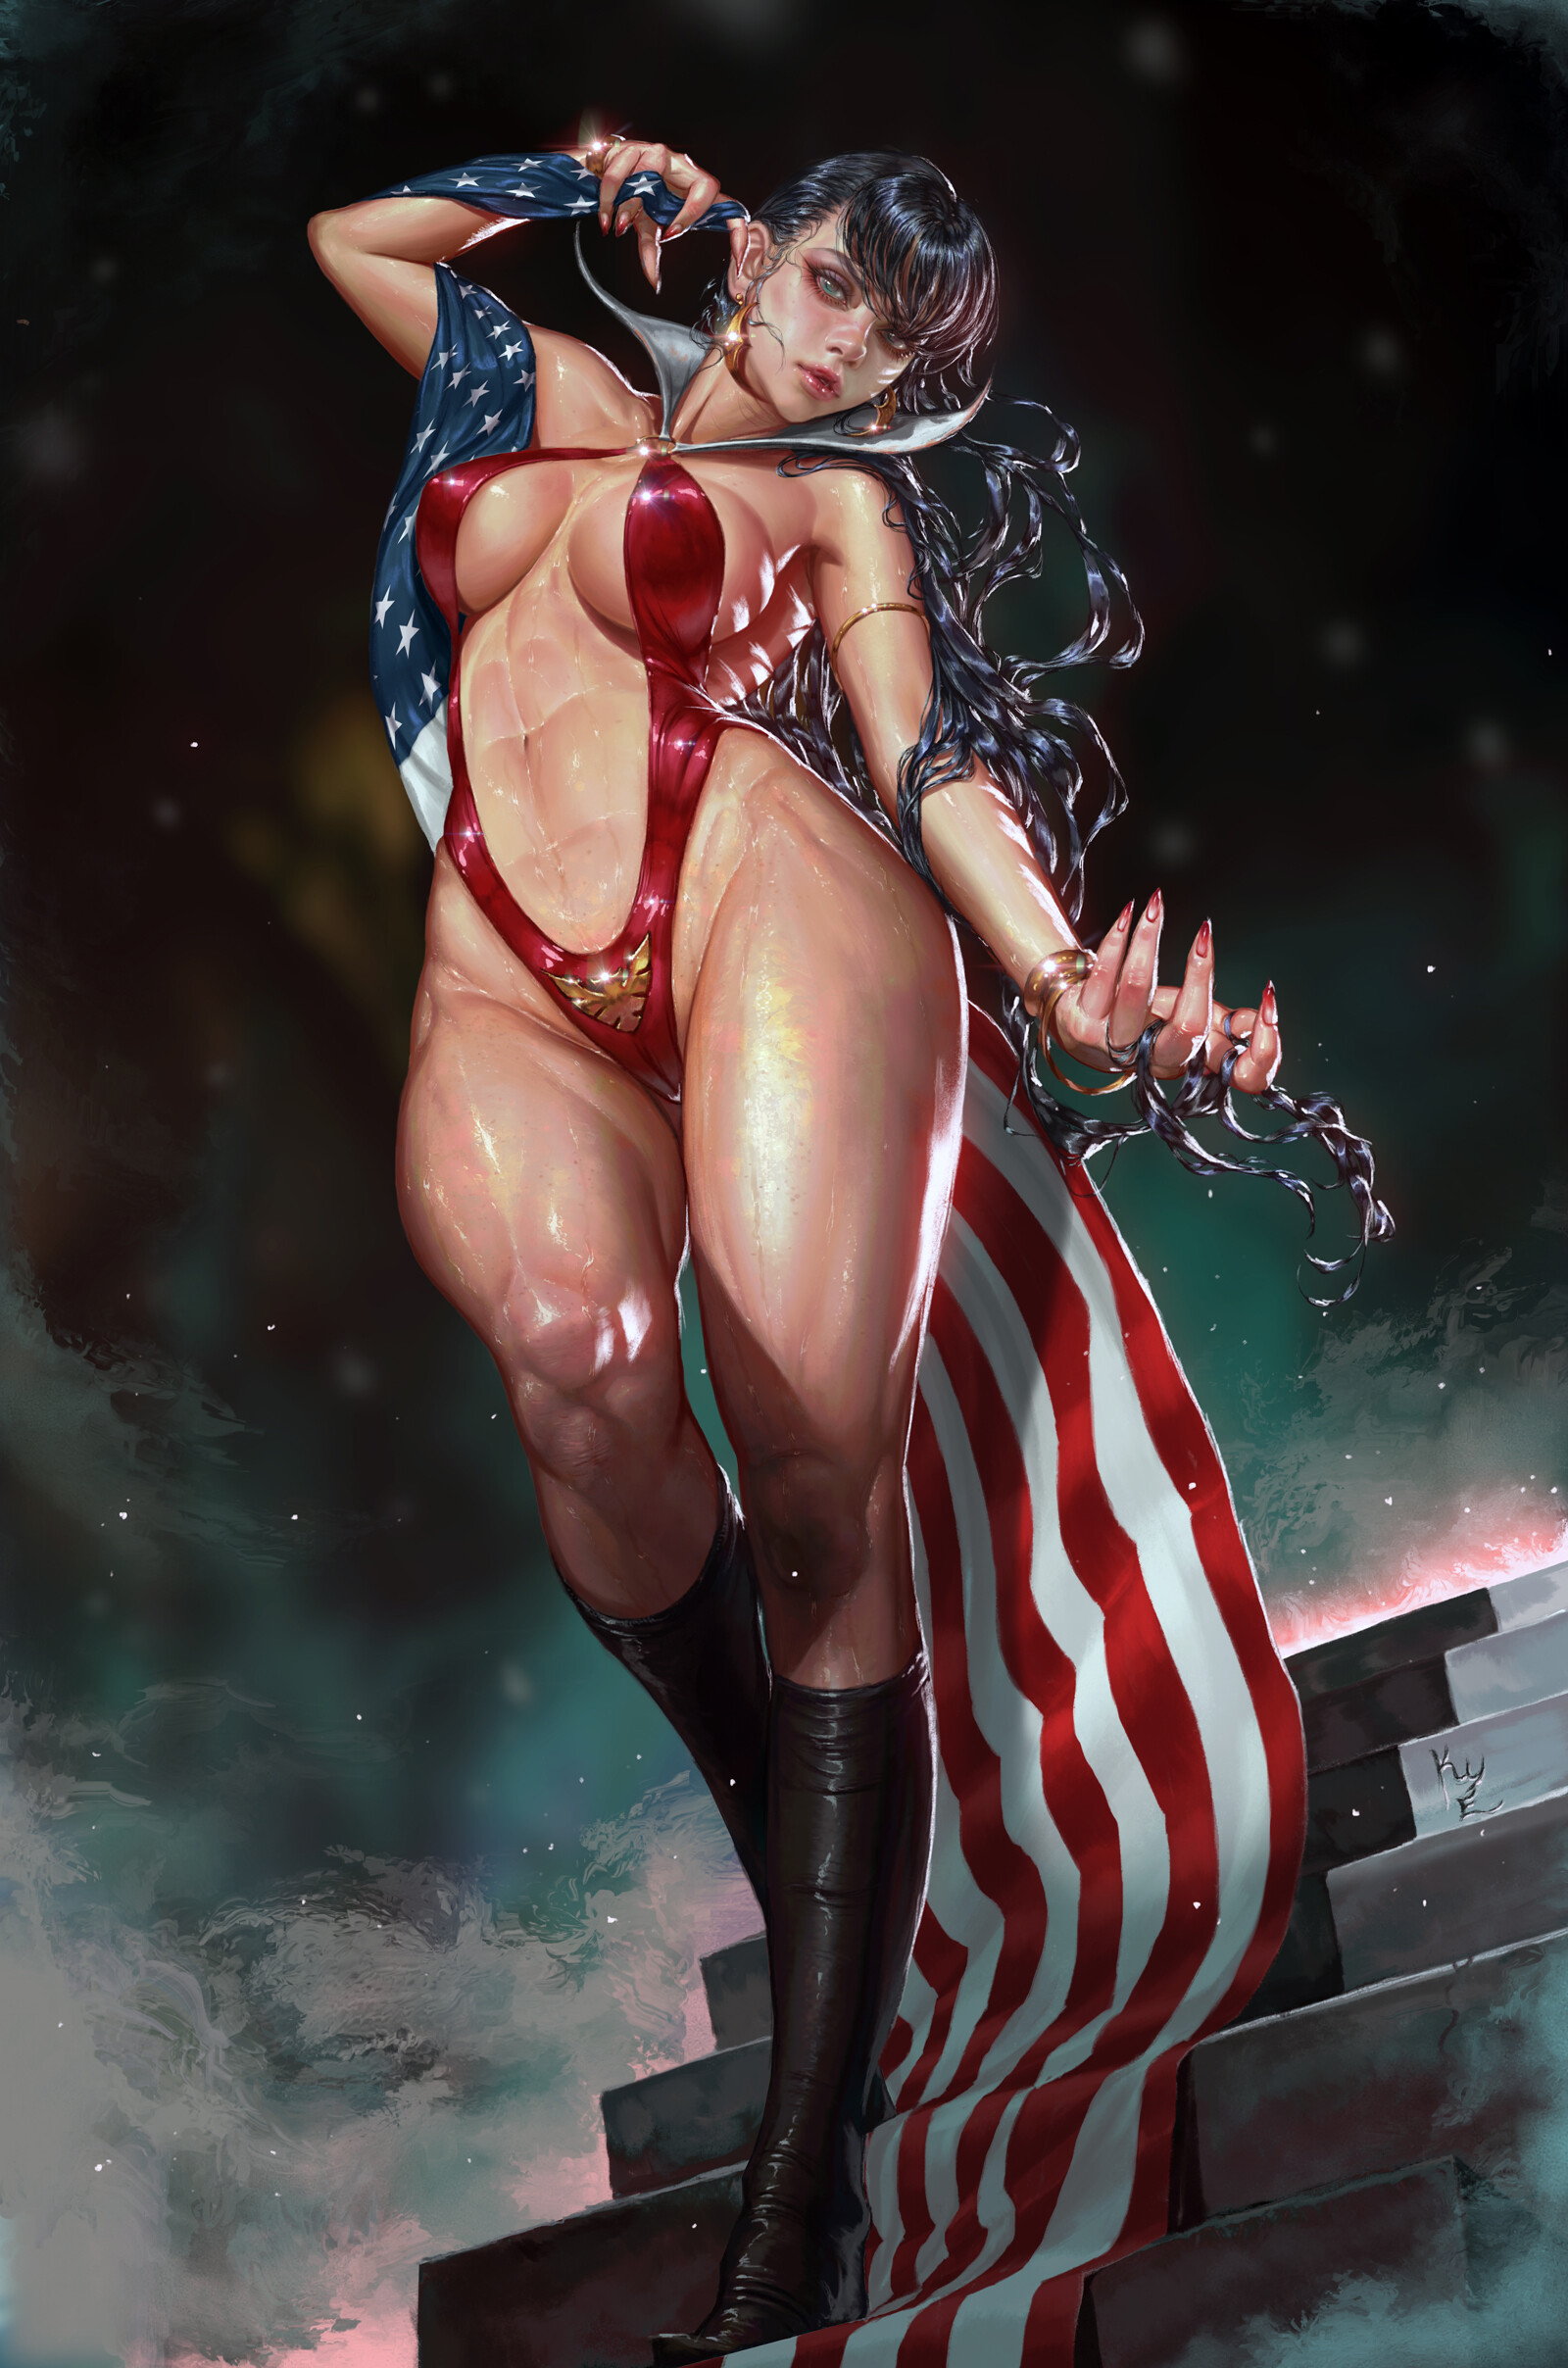 General 1600x2416 KyuYong Eom drawing Vampirella women dark hair long hair bodysuit red clothing American flag flag stairs low-angle swimwear wet digital art